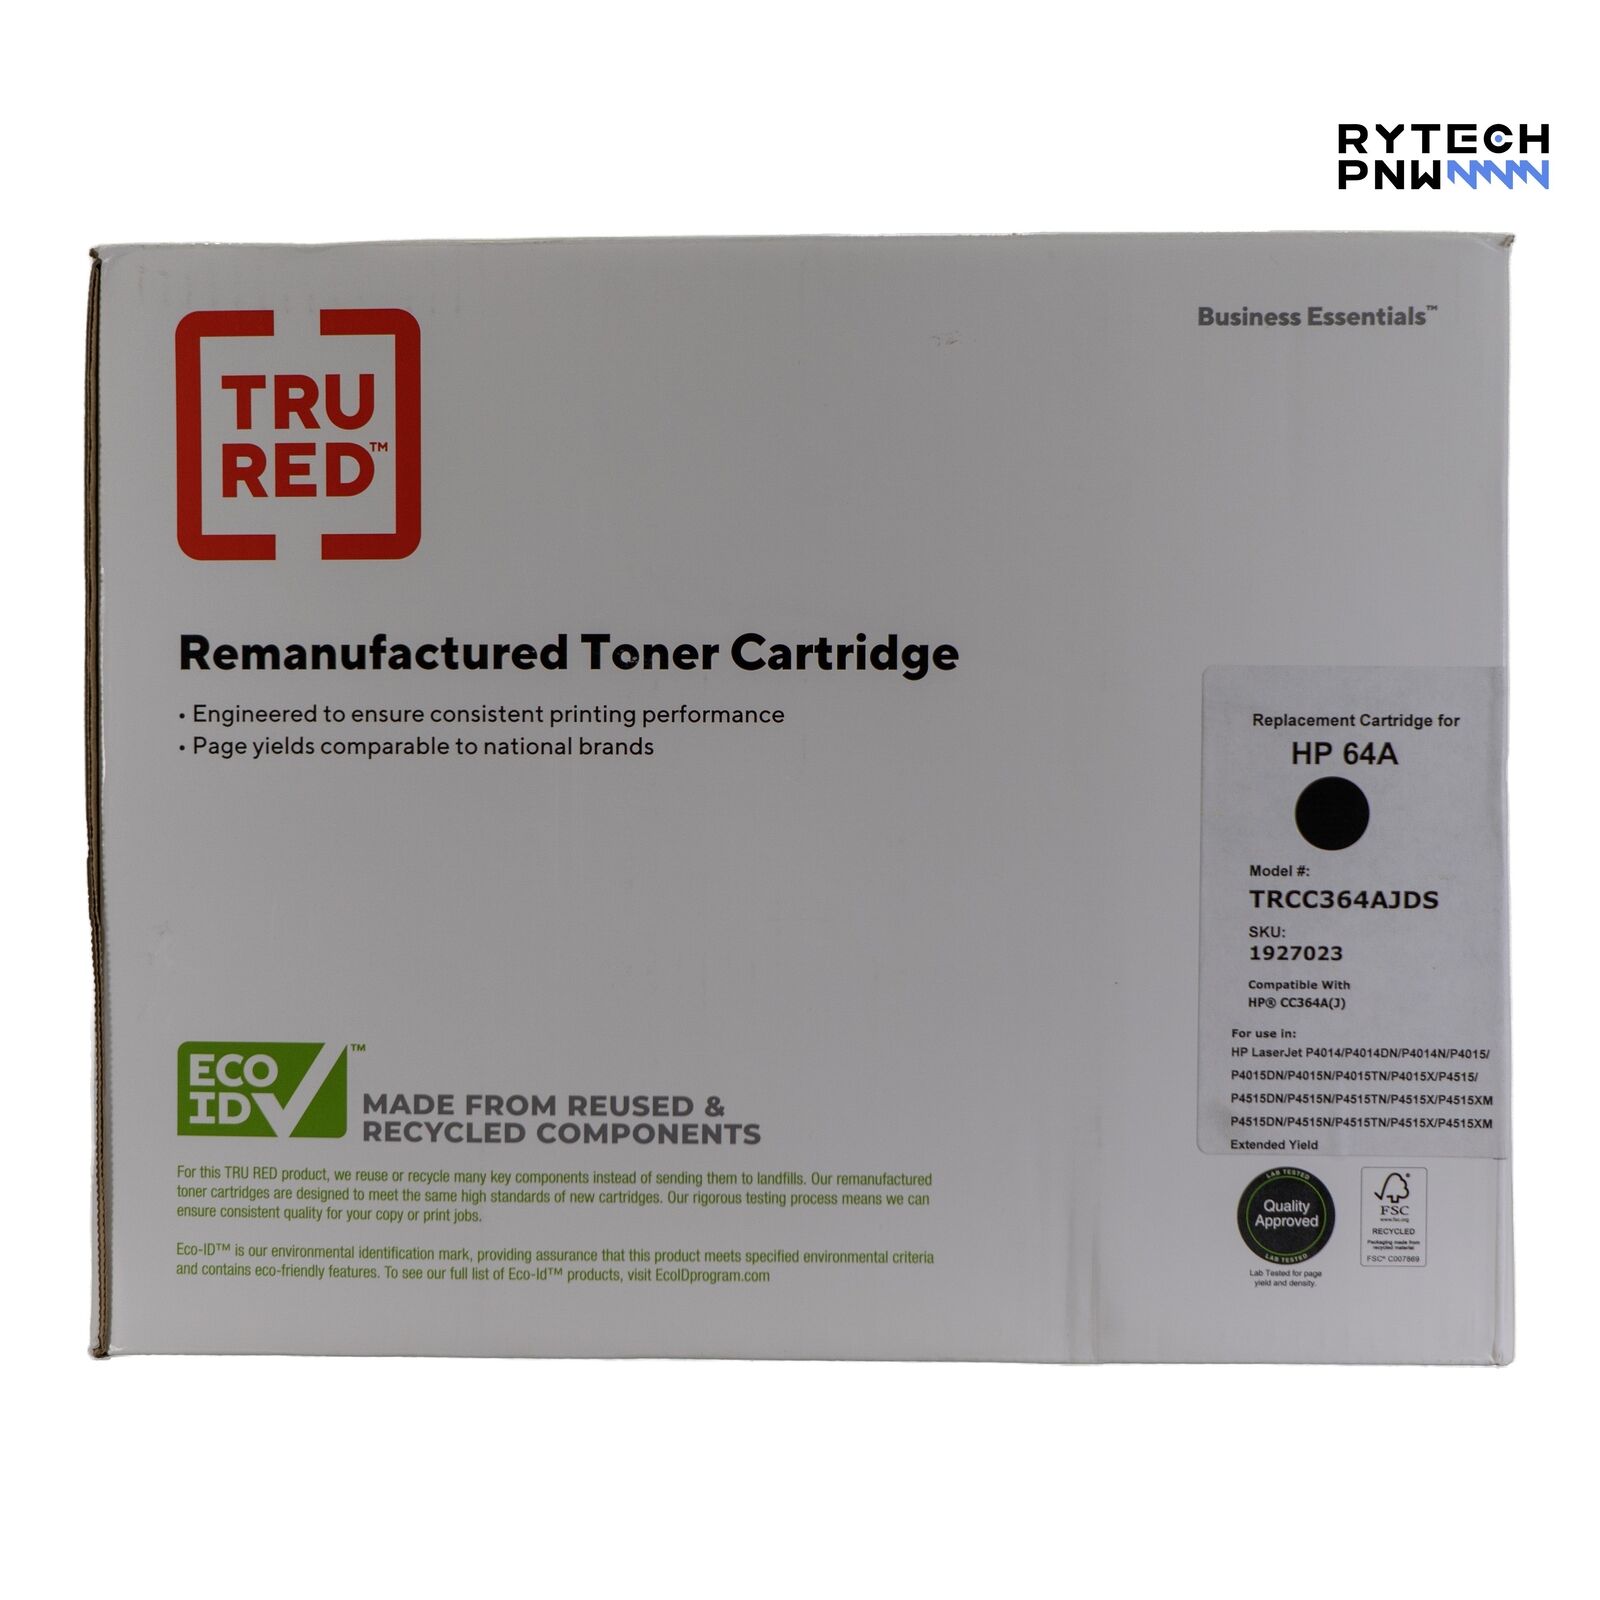 Tru Red Toner Cartridge | 64A | Compatible With HP CC364A (J) | Black